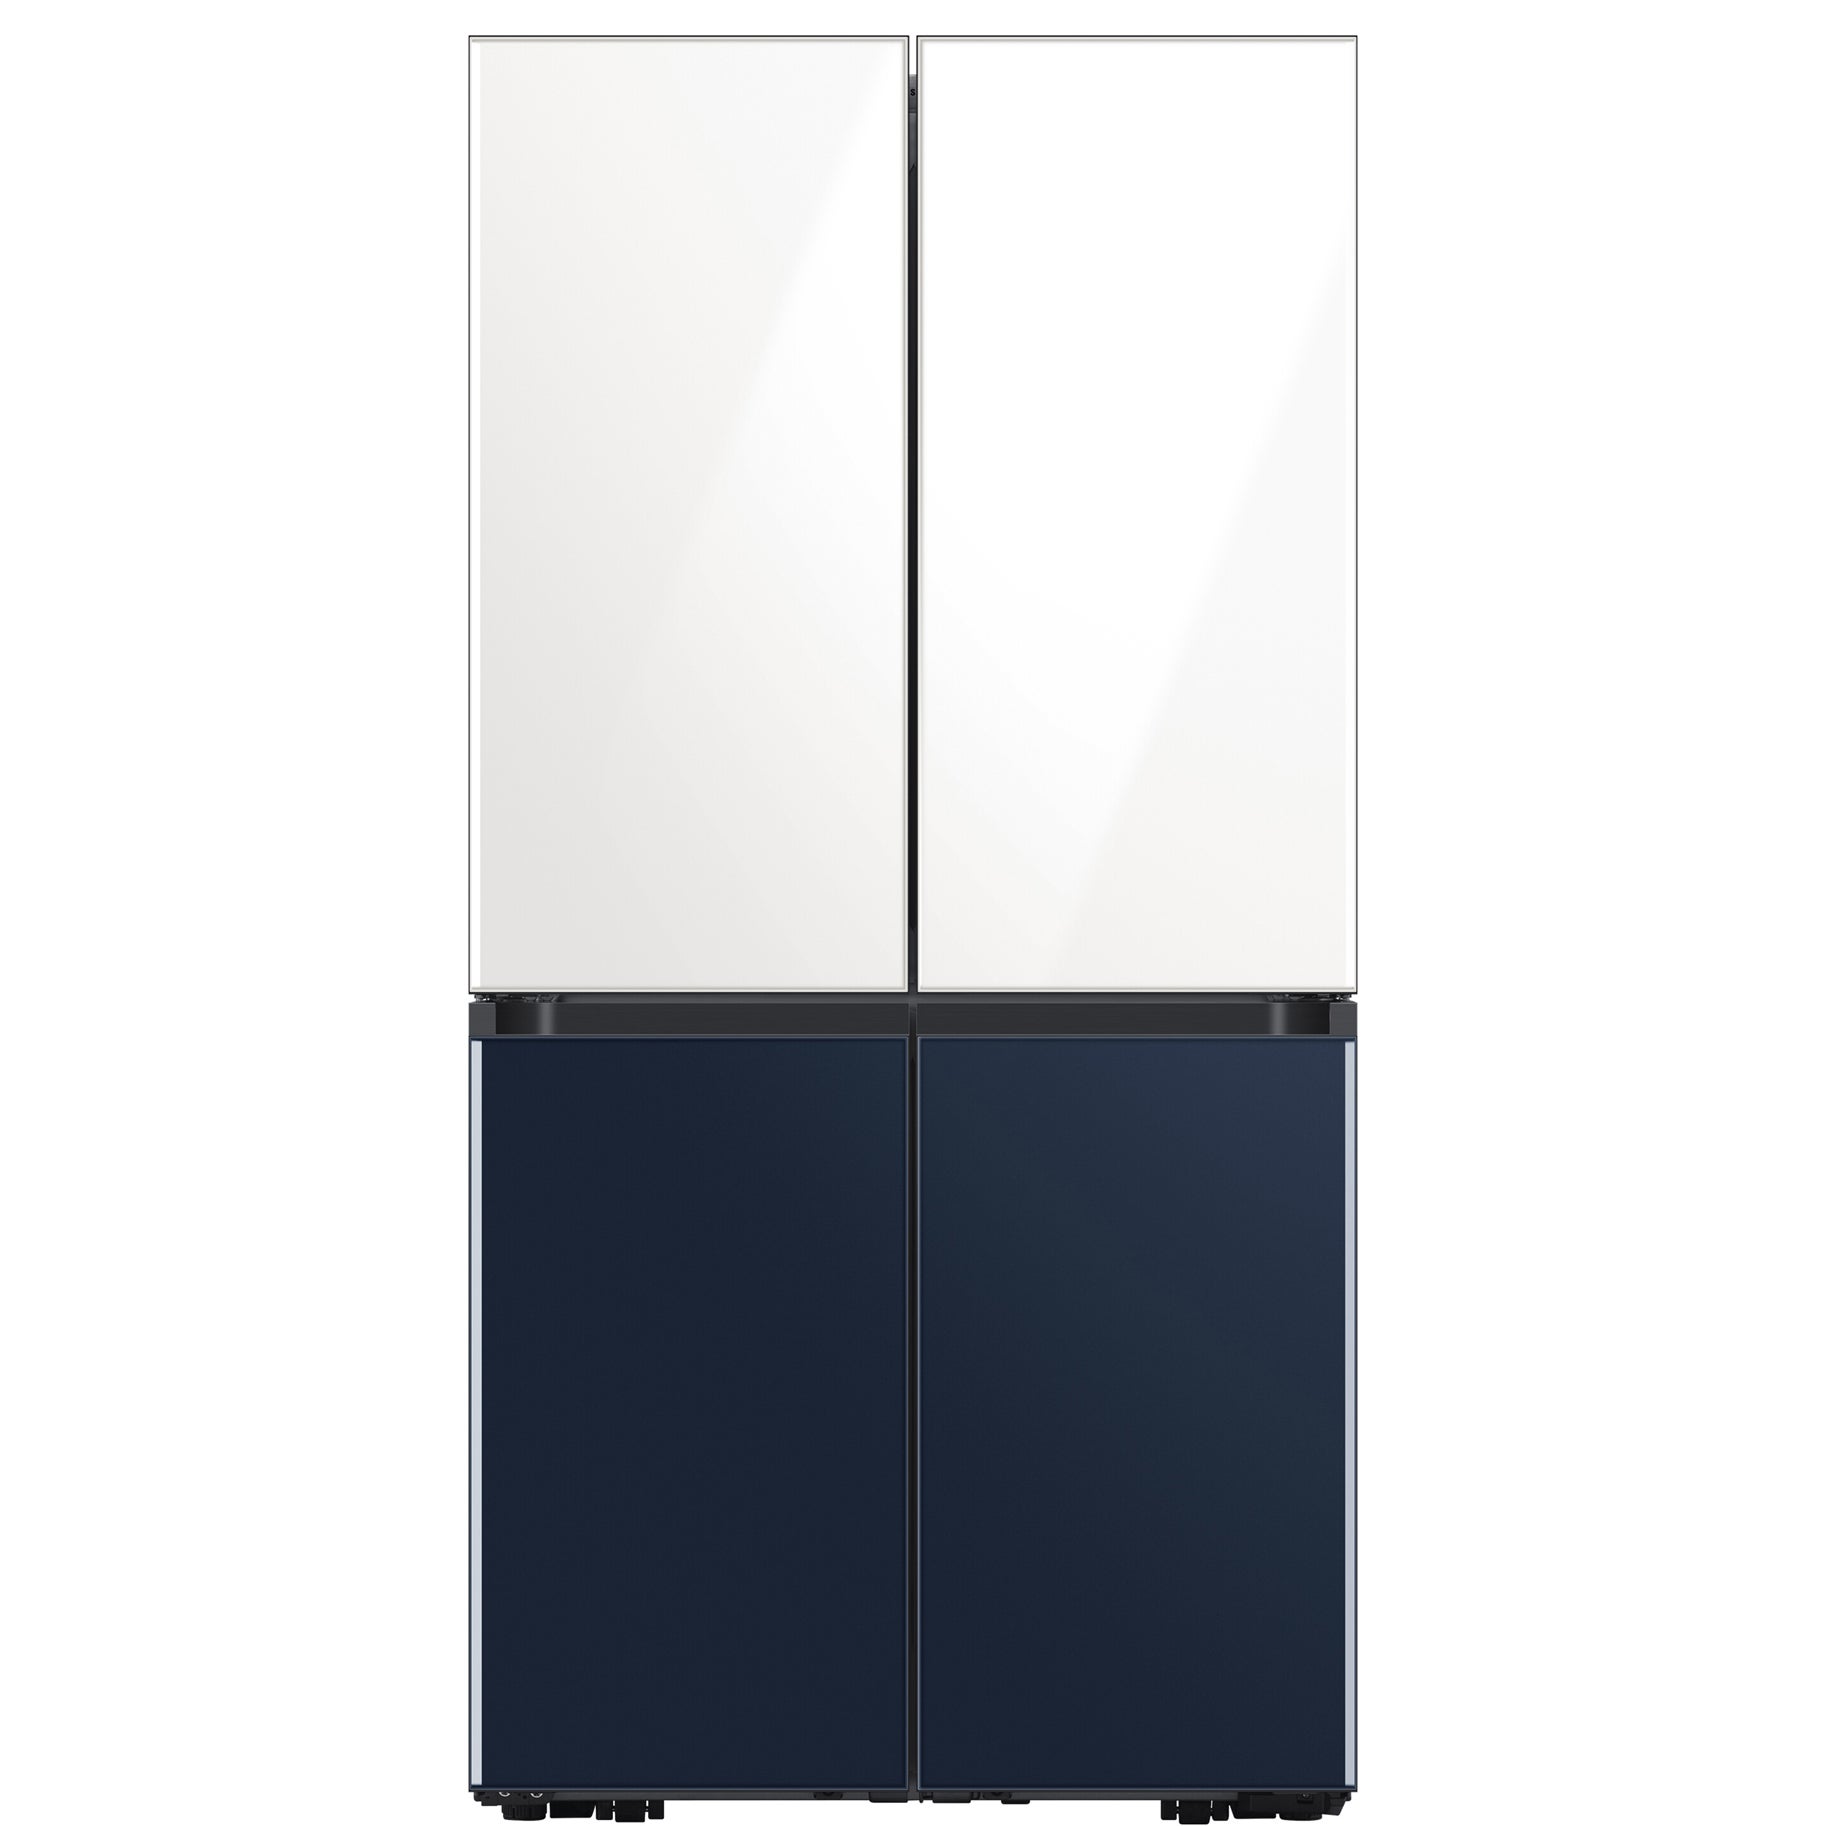 Samsung BESPOKE Counter Depth Refrigerator Domino